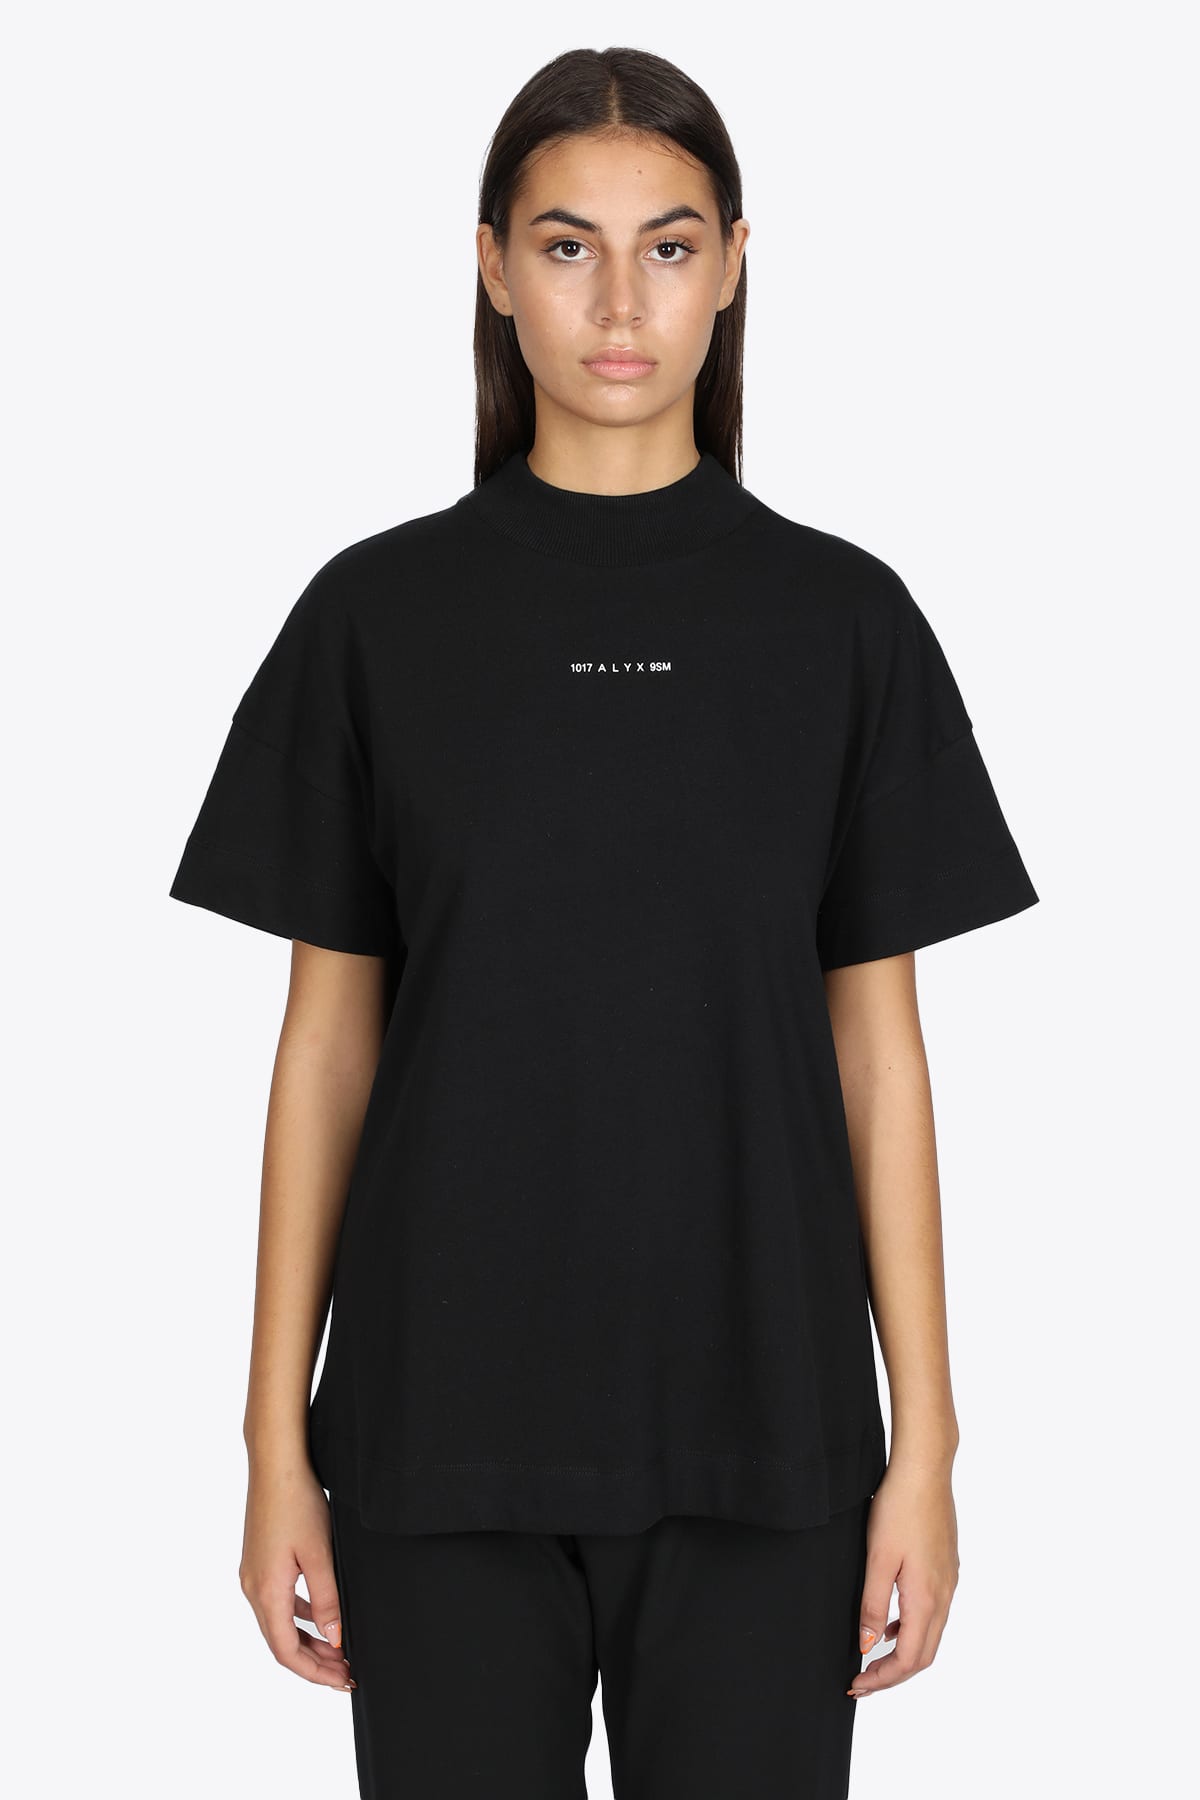 1017 ALYX 9SM Womens Mockneck Tee Visual Black cotton mockneck t-shirt